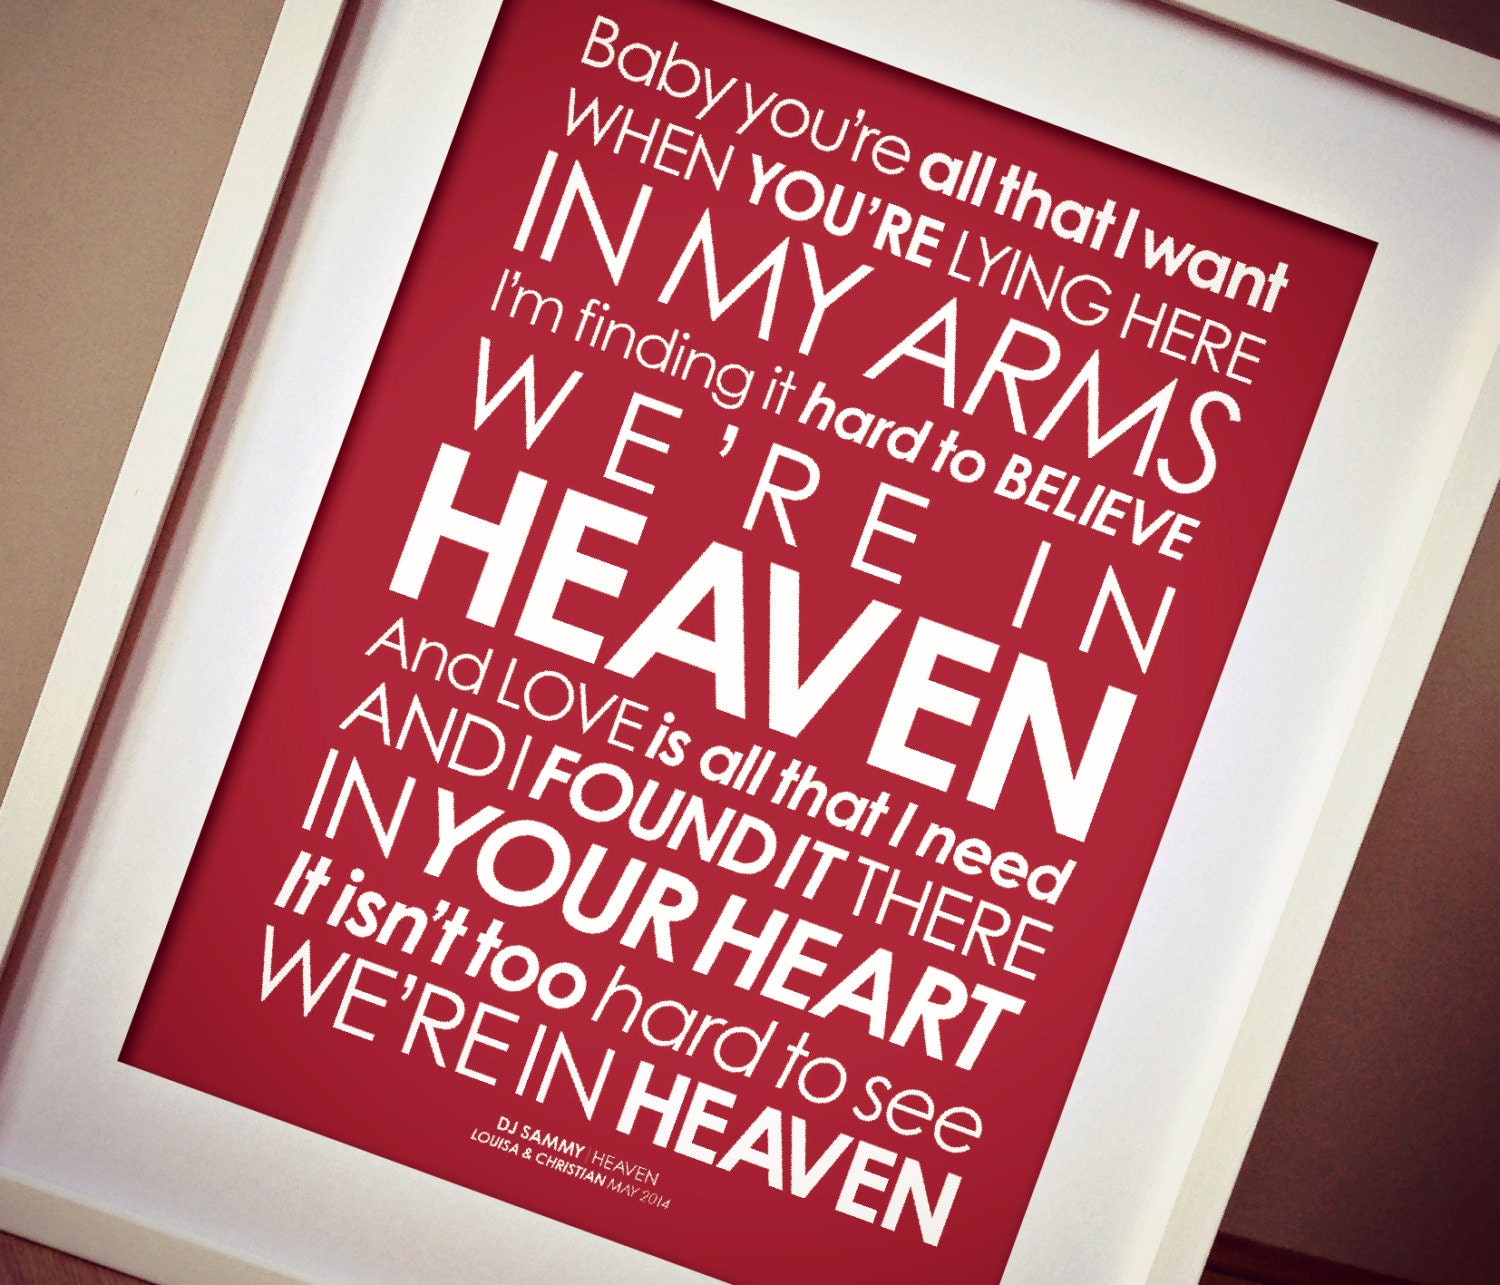 DJ Sammy Bryan Adams 'Heaven' Lyrics print. Option